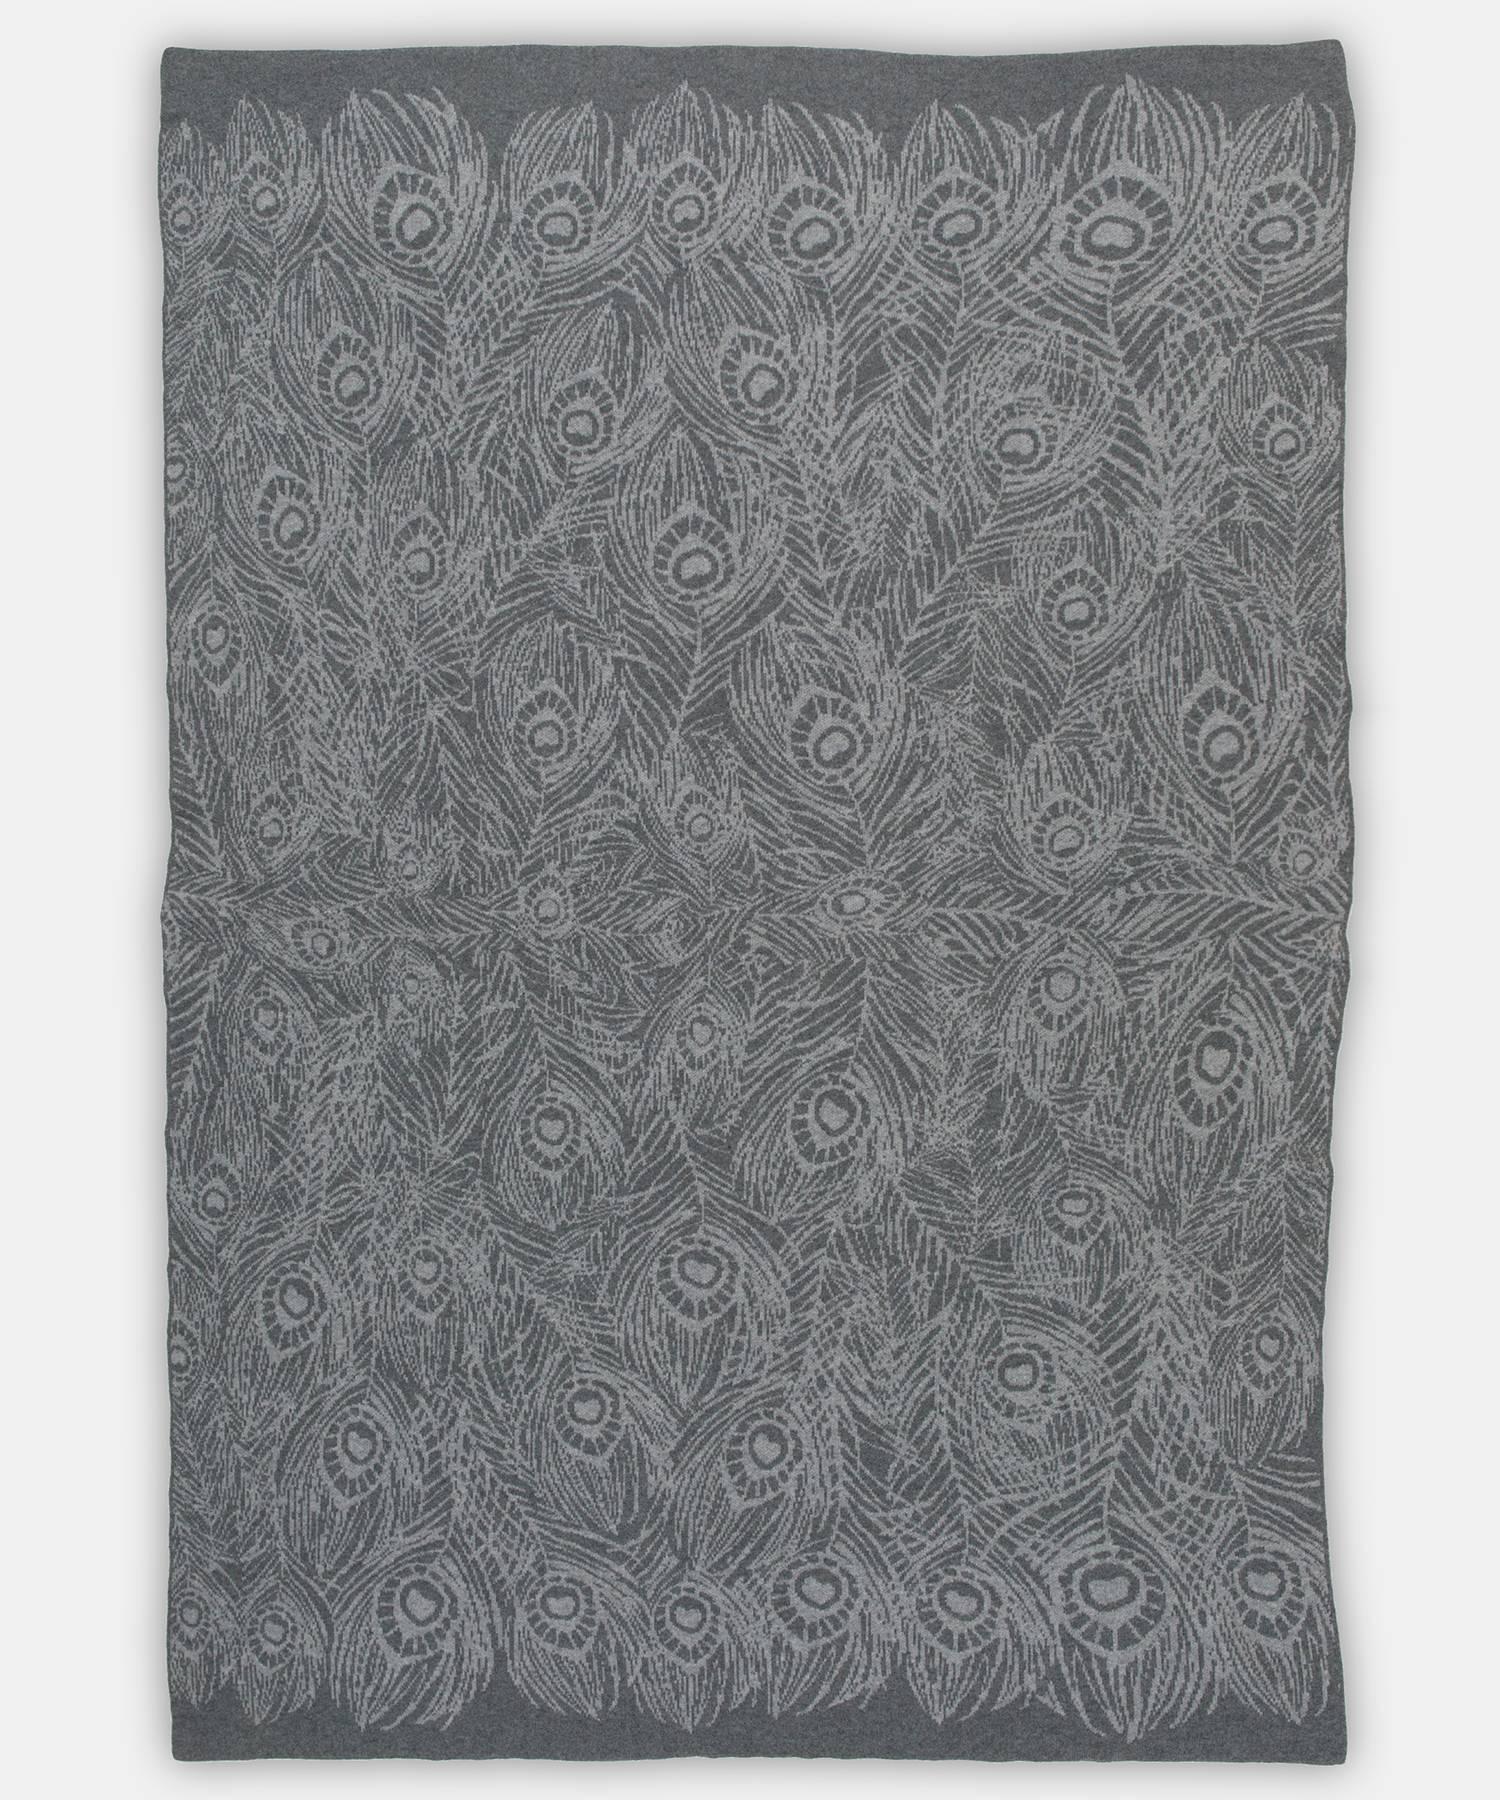 Mongolian Dorian Gray Blanket by Saved, New York